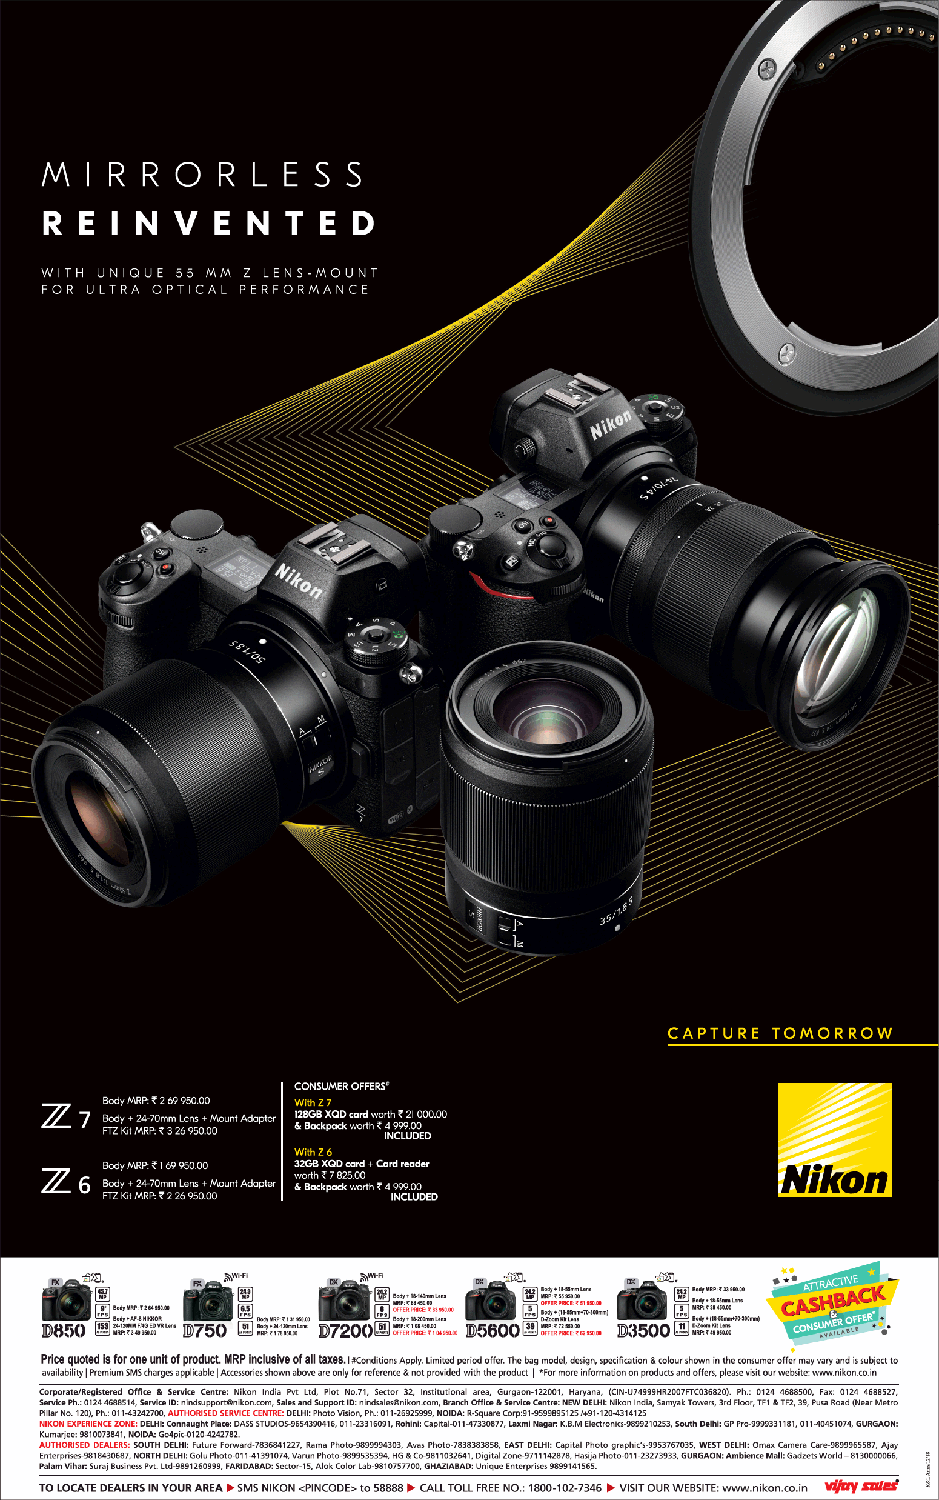 nikon-cameras-mirrorless-reinvented-capture-tomorrow-ad-times-of-india-delhi-01-12-2018.png